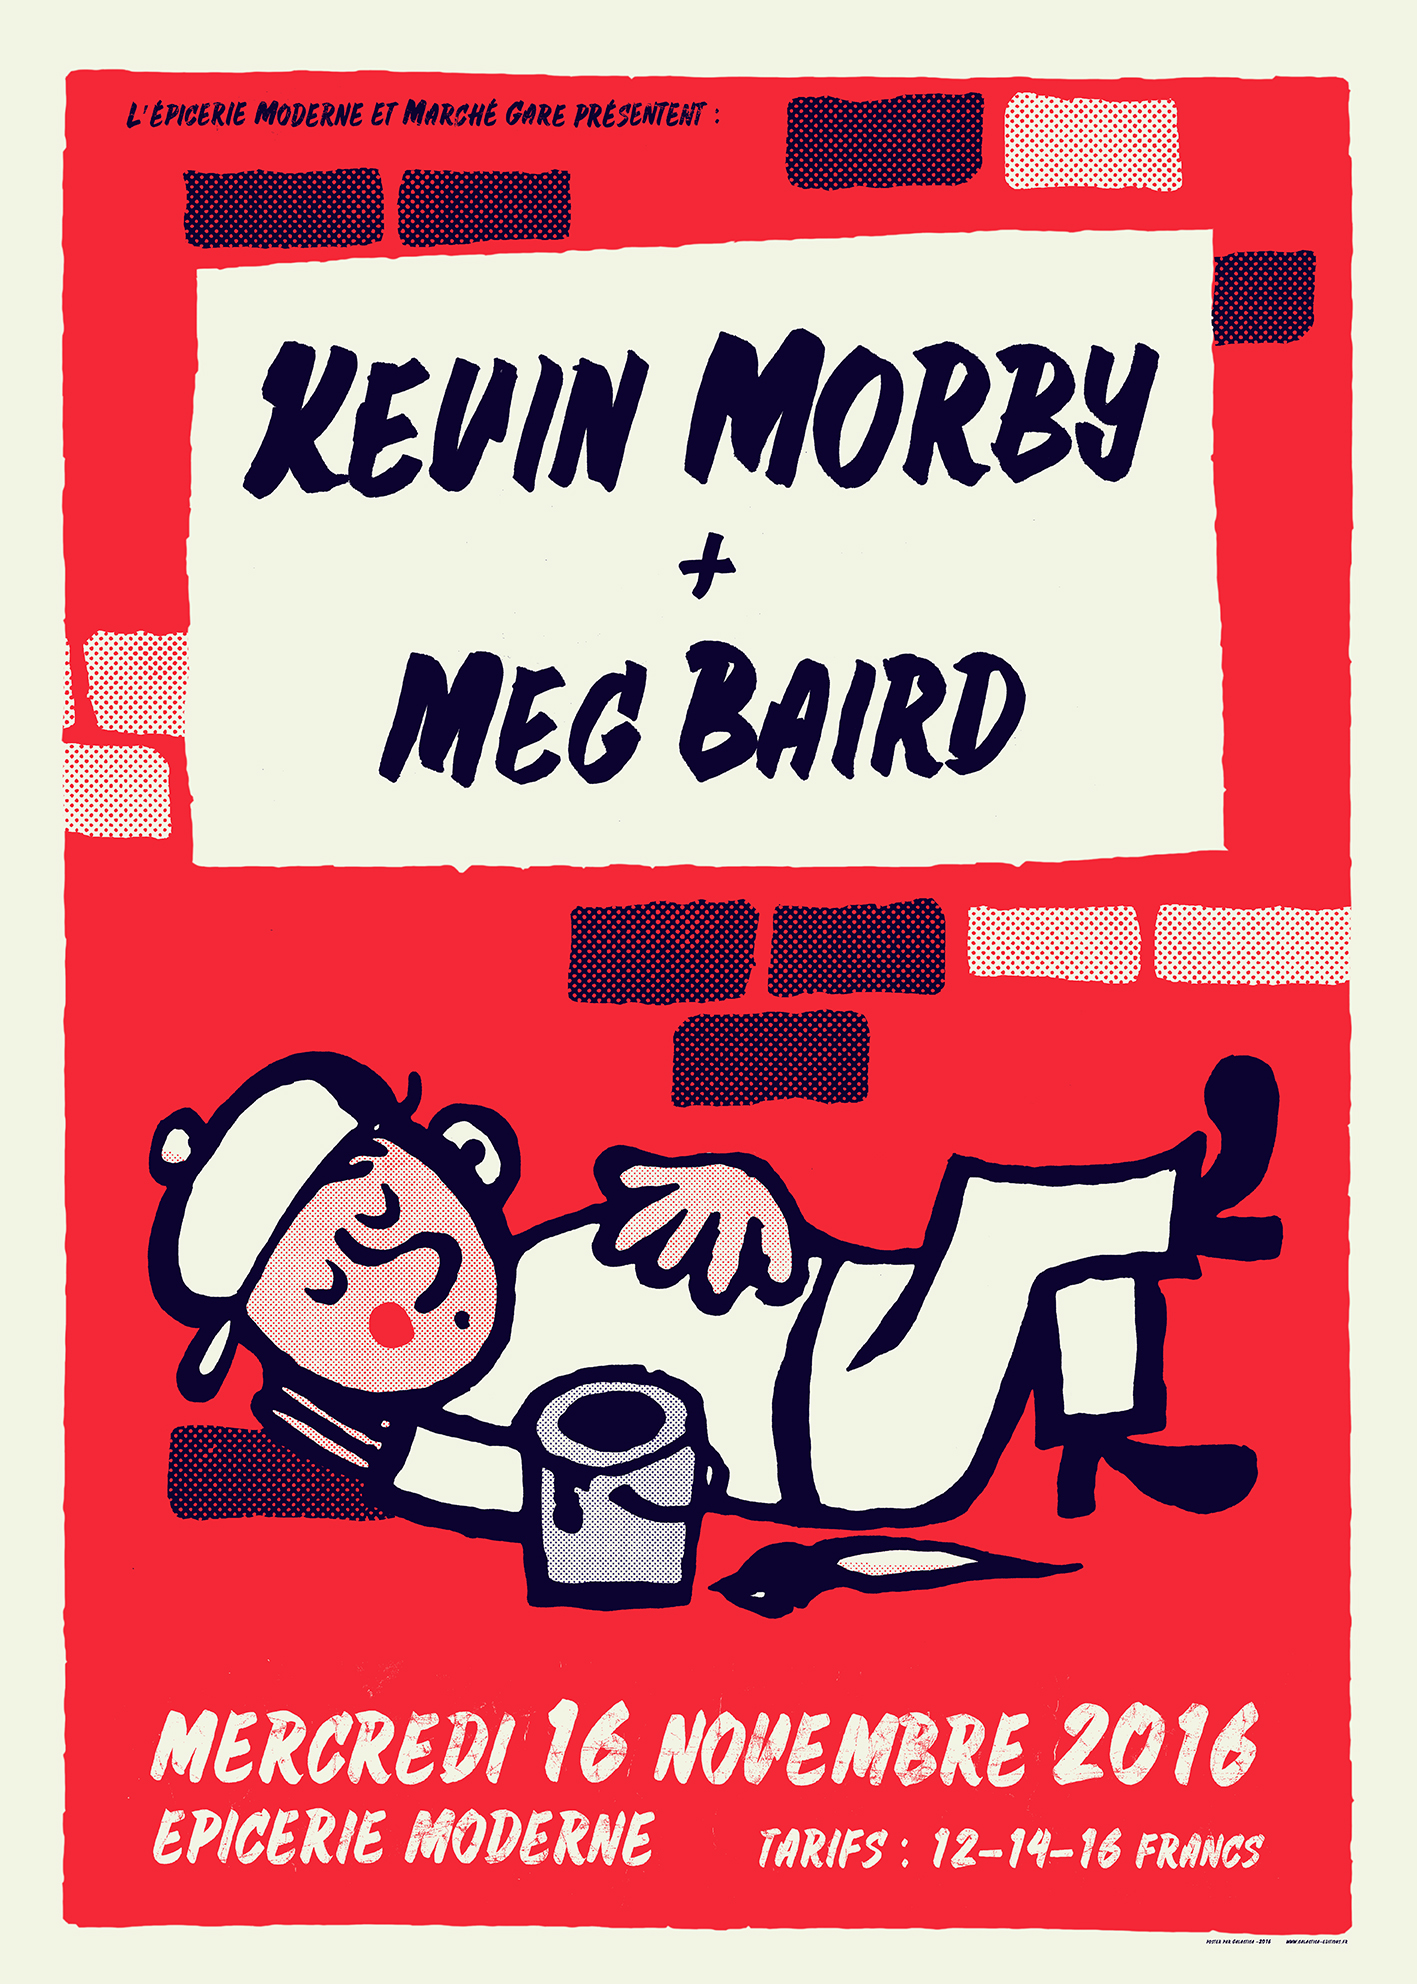 Kevin Morby + Meg Baird